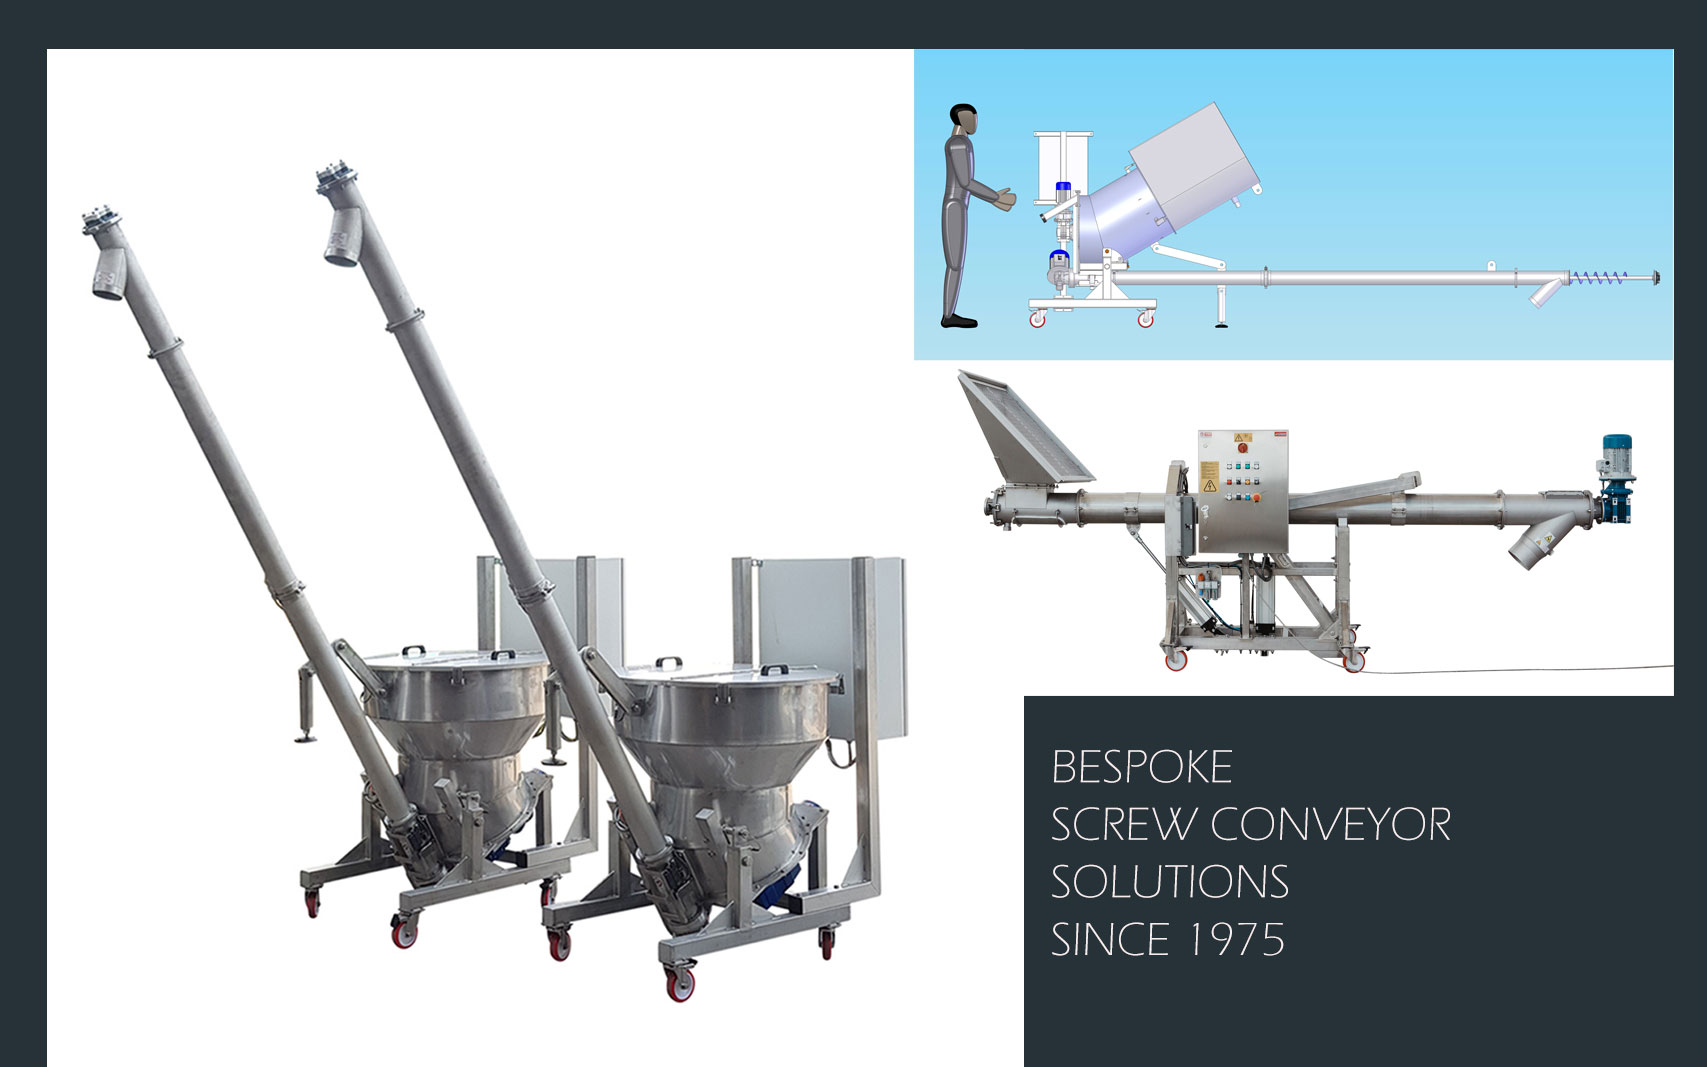 Bespoke screw conveyor for bulk material products